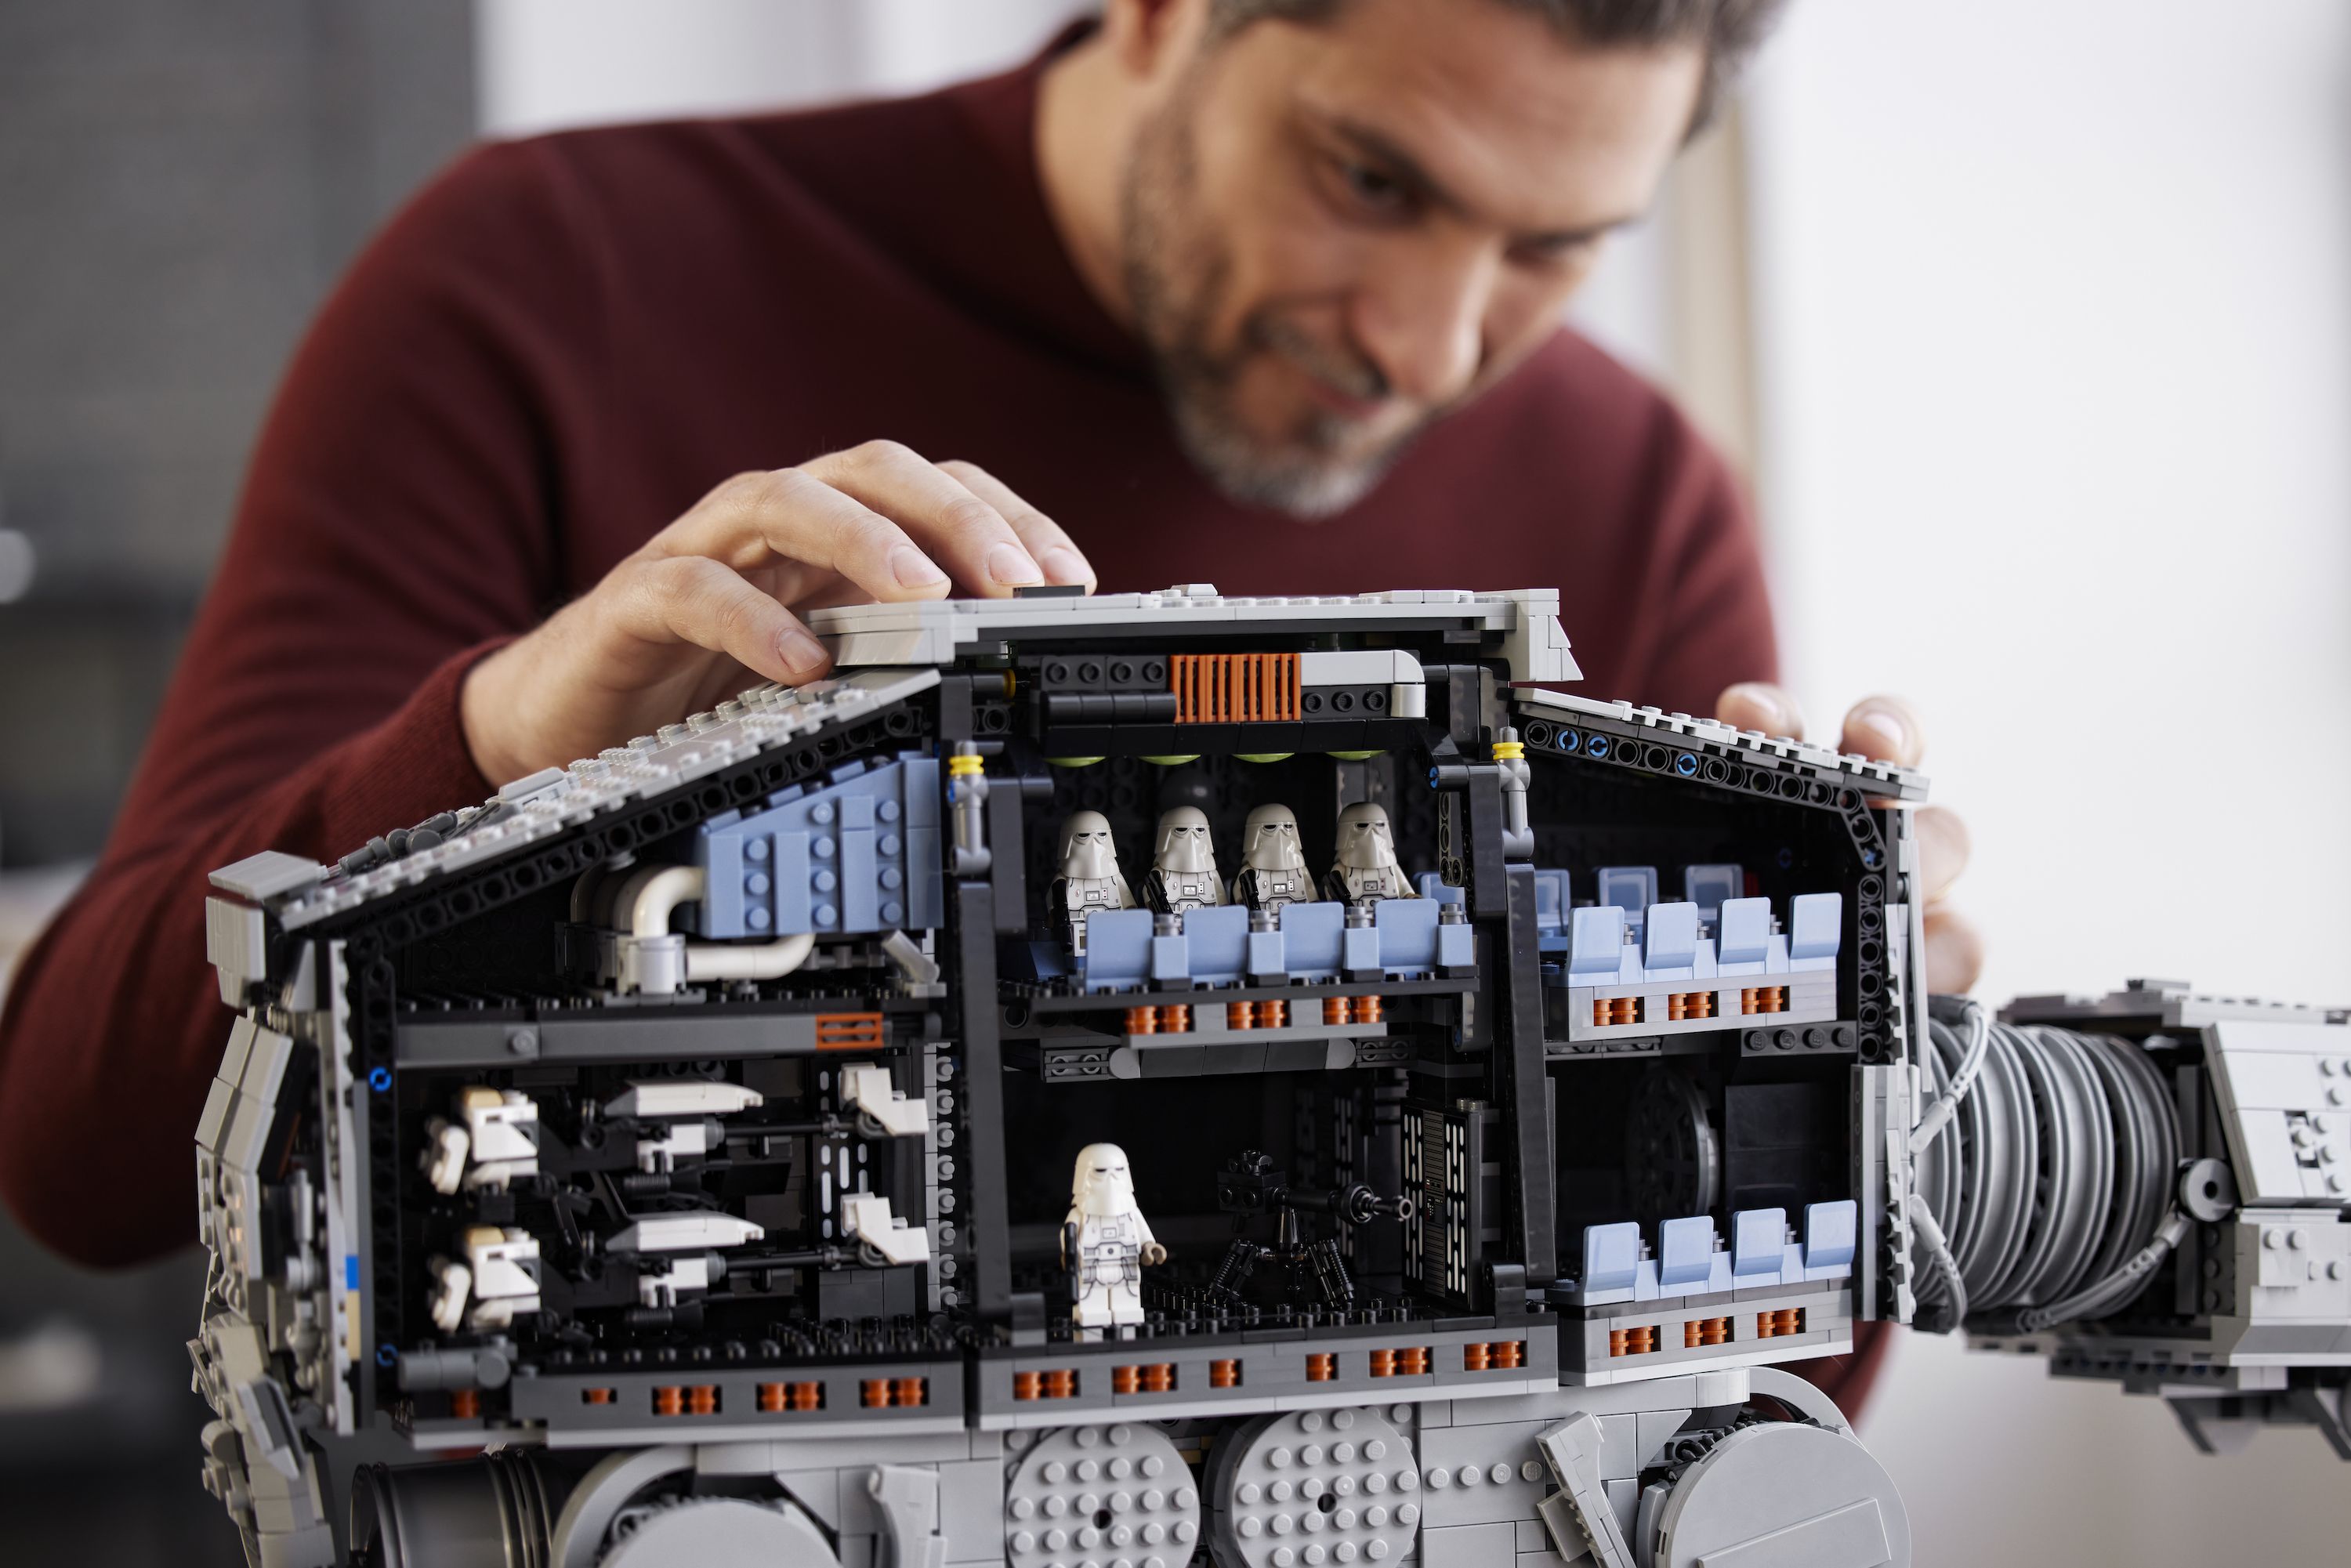 Lego releases deluxe Star Wars' walker set I 75313